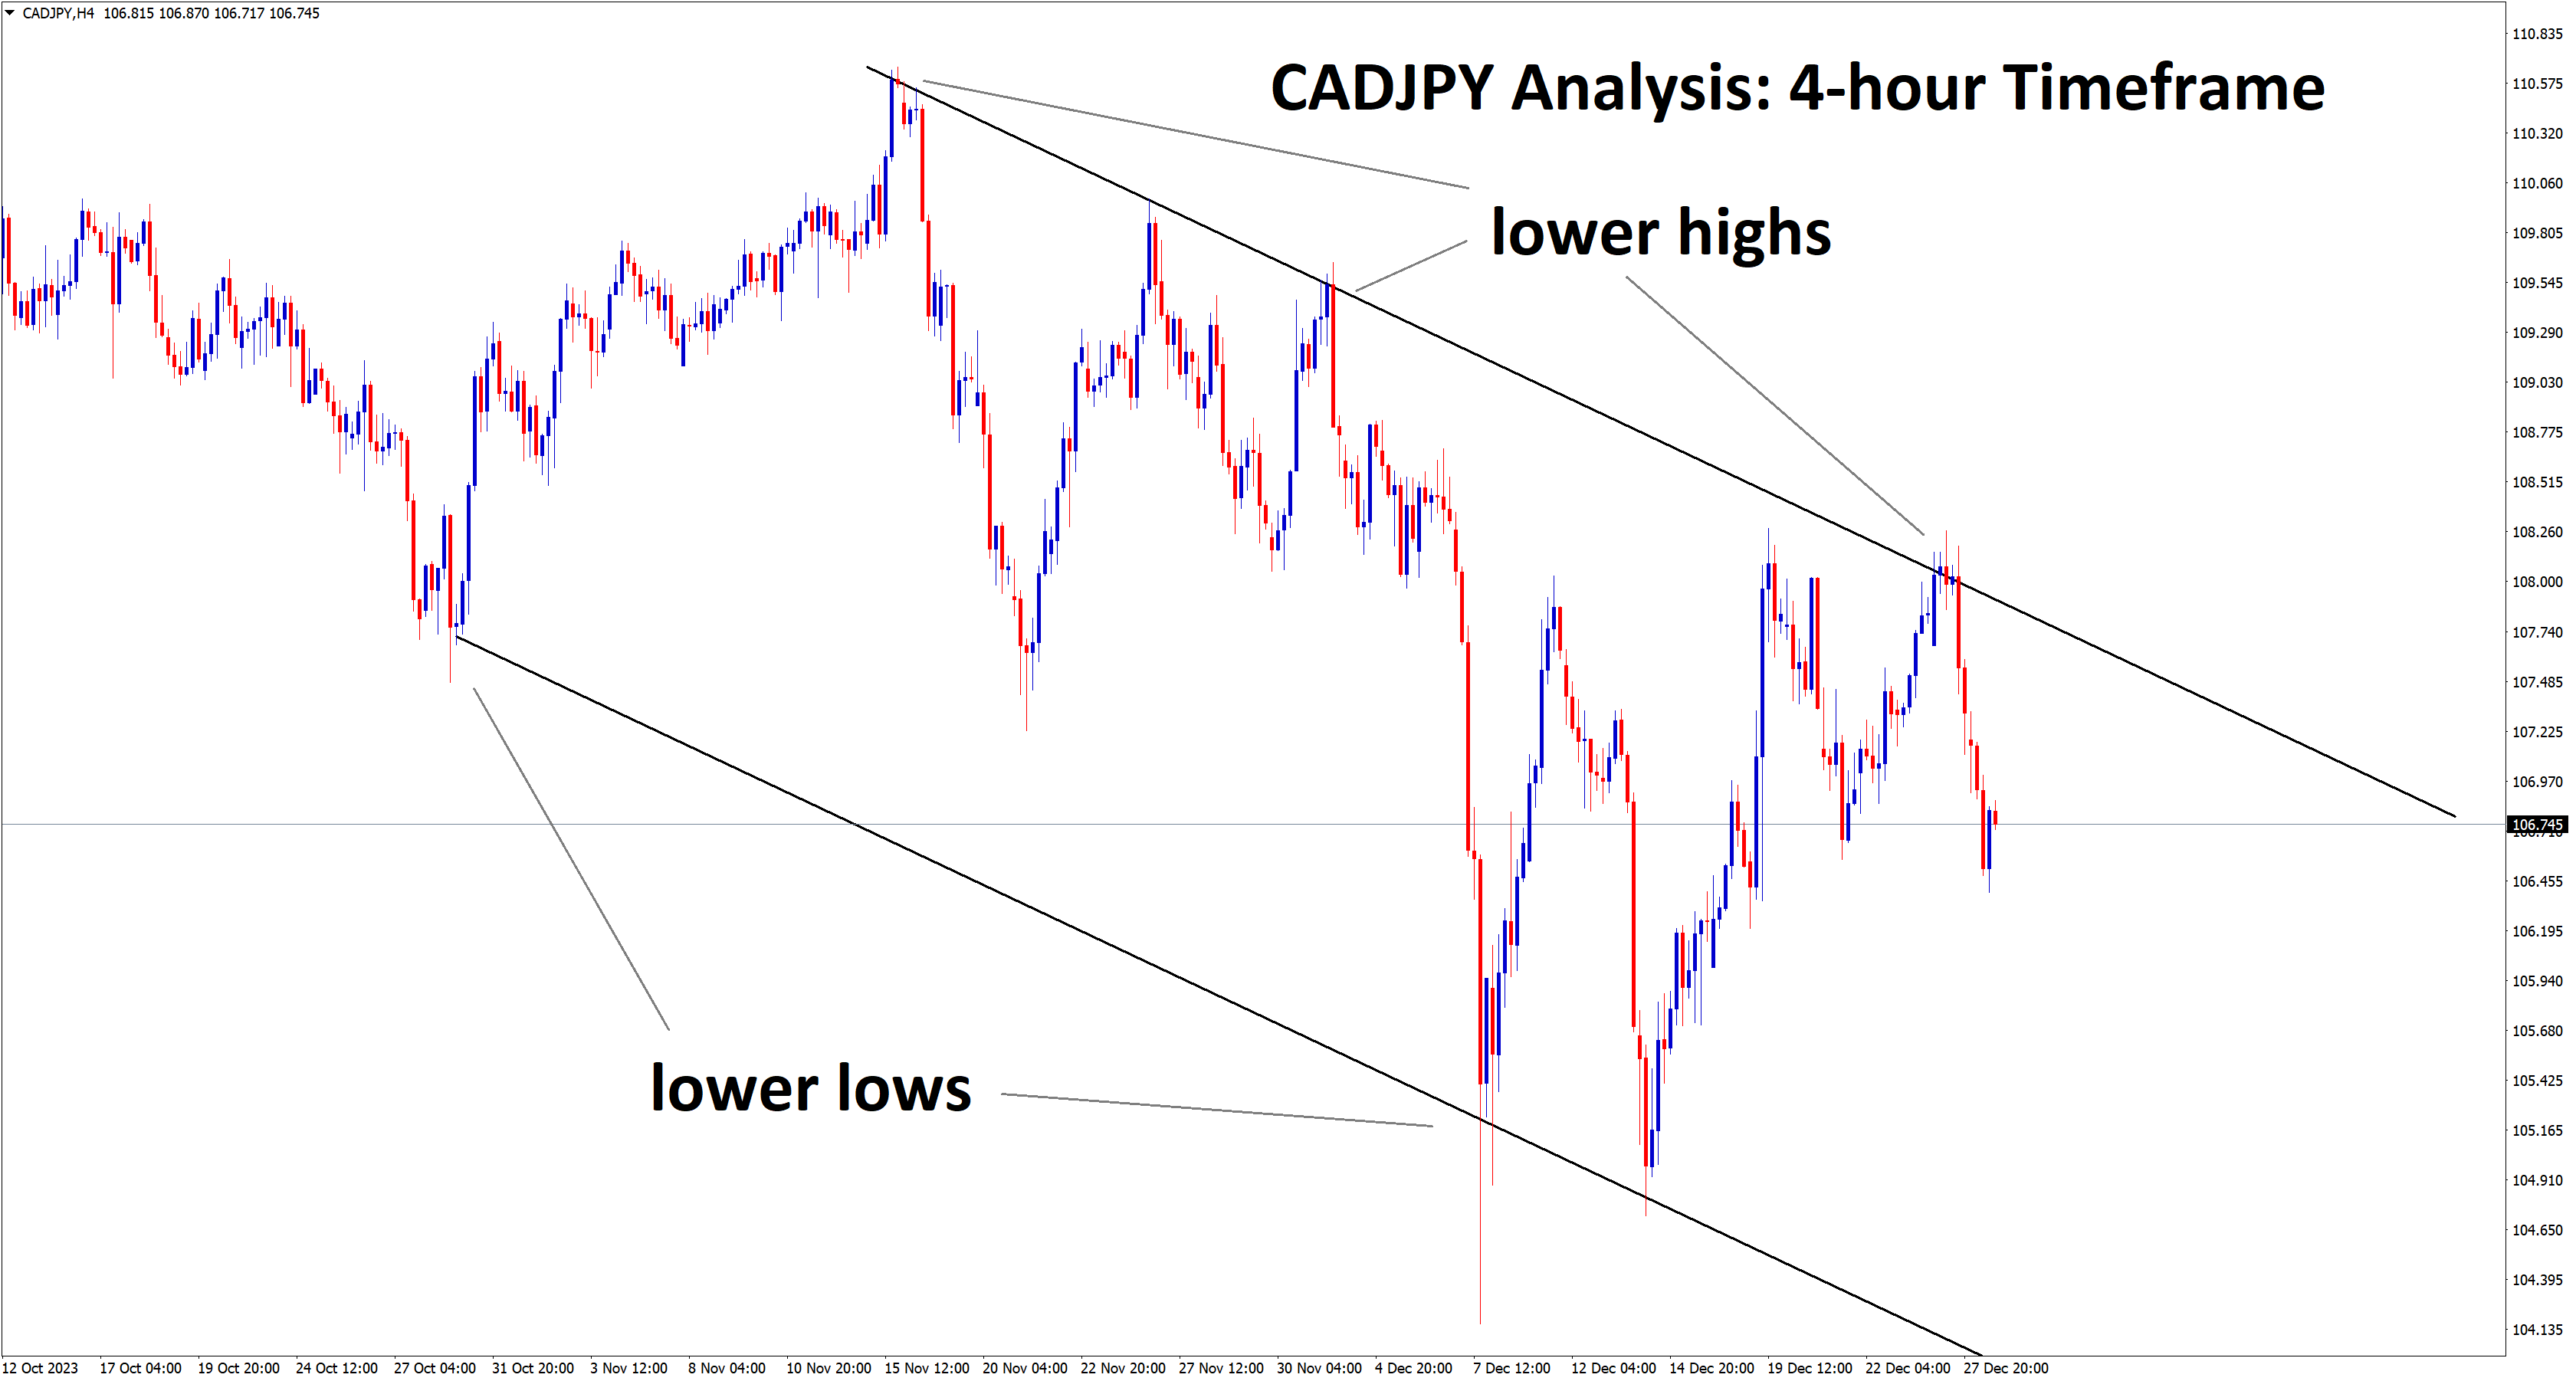 cadjpy falling from lower high 1